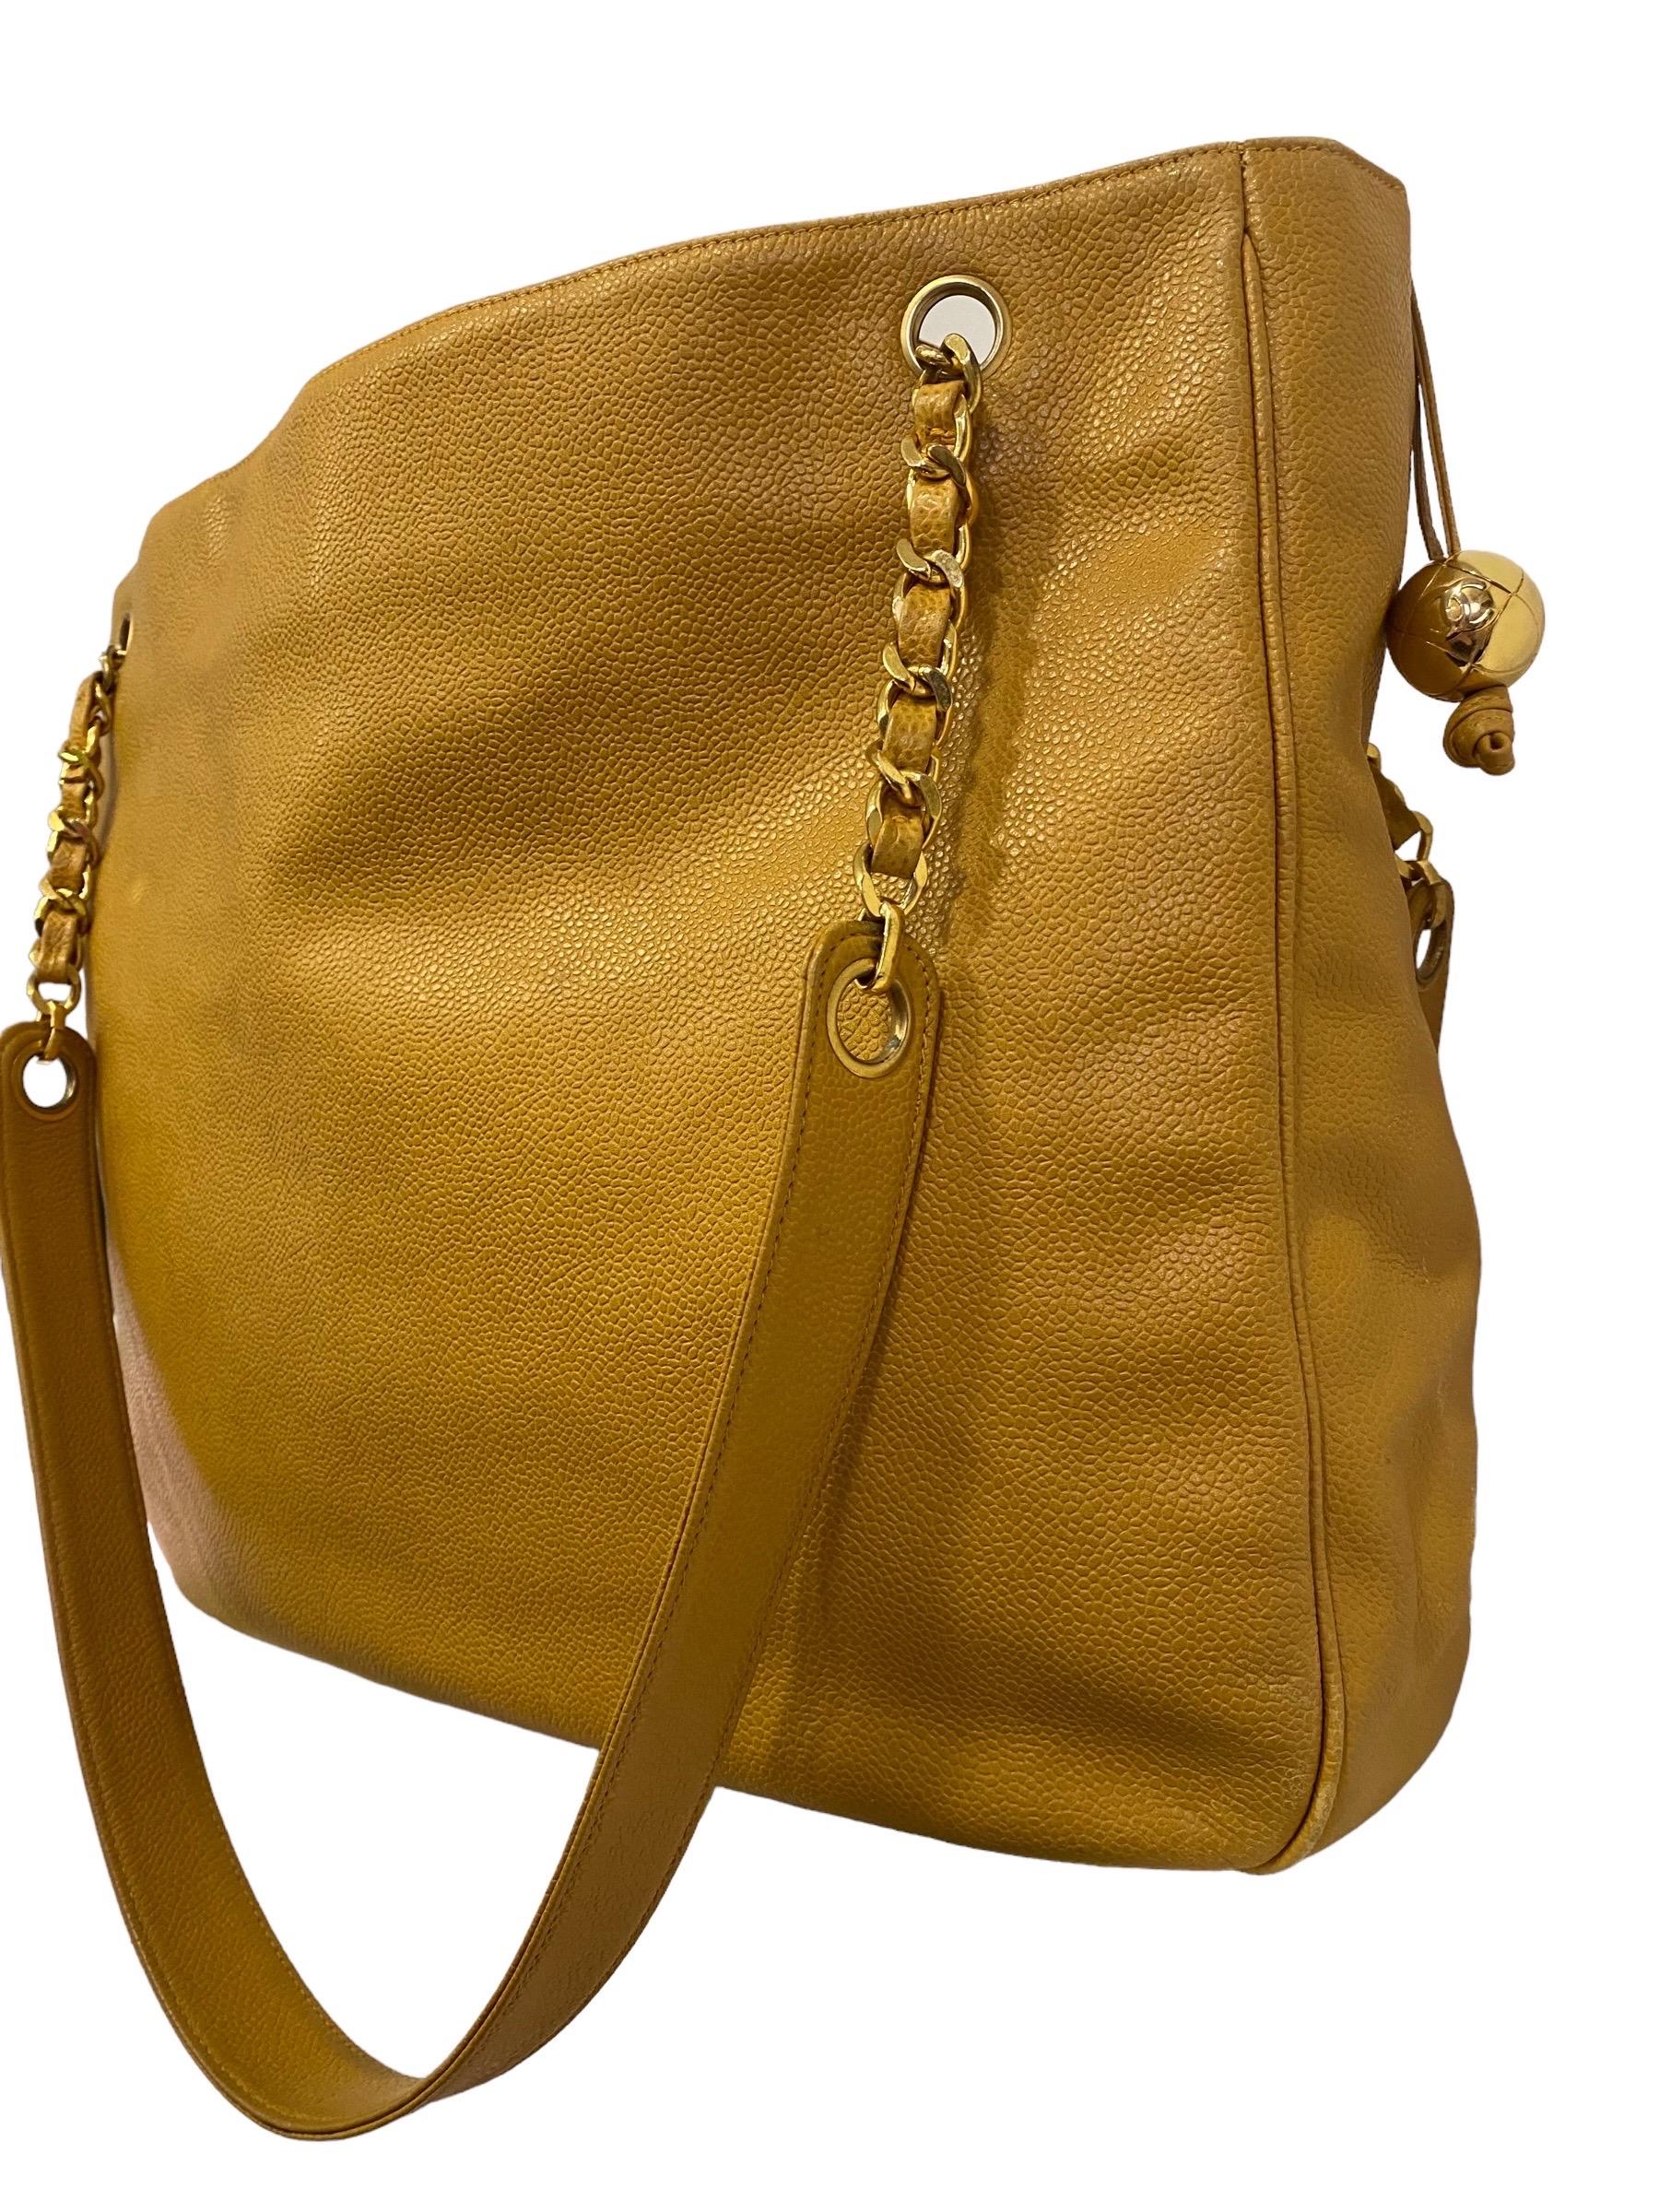 Chanel Yellow Big Tote Shoulder Bag Vintage  5